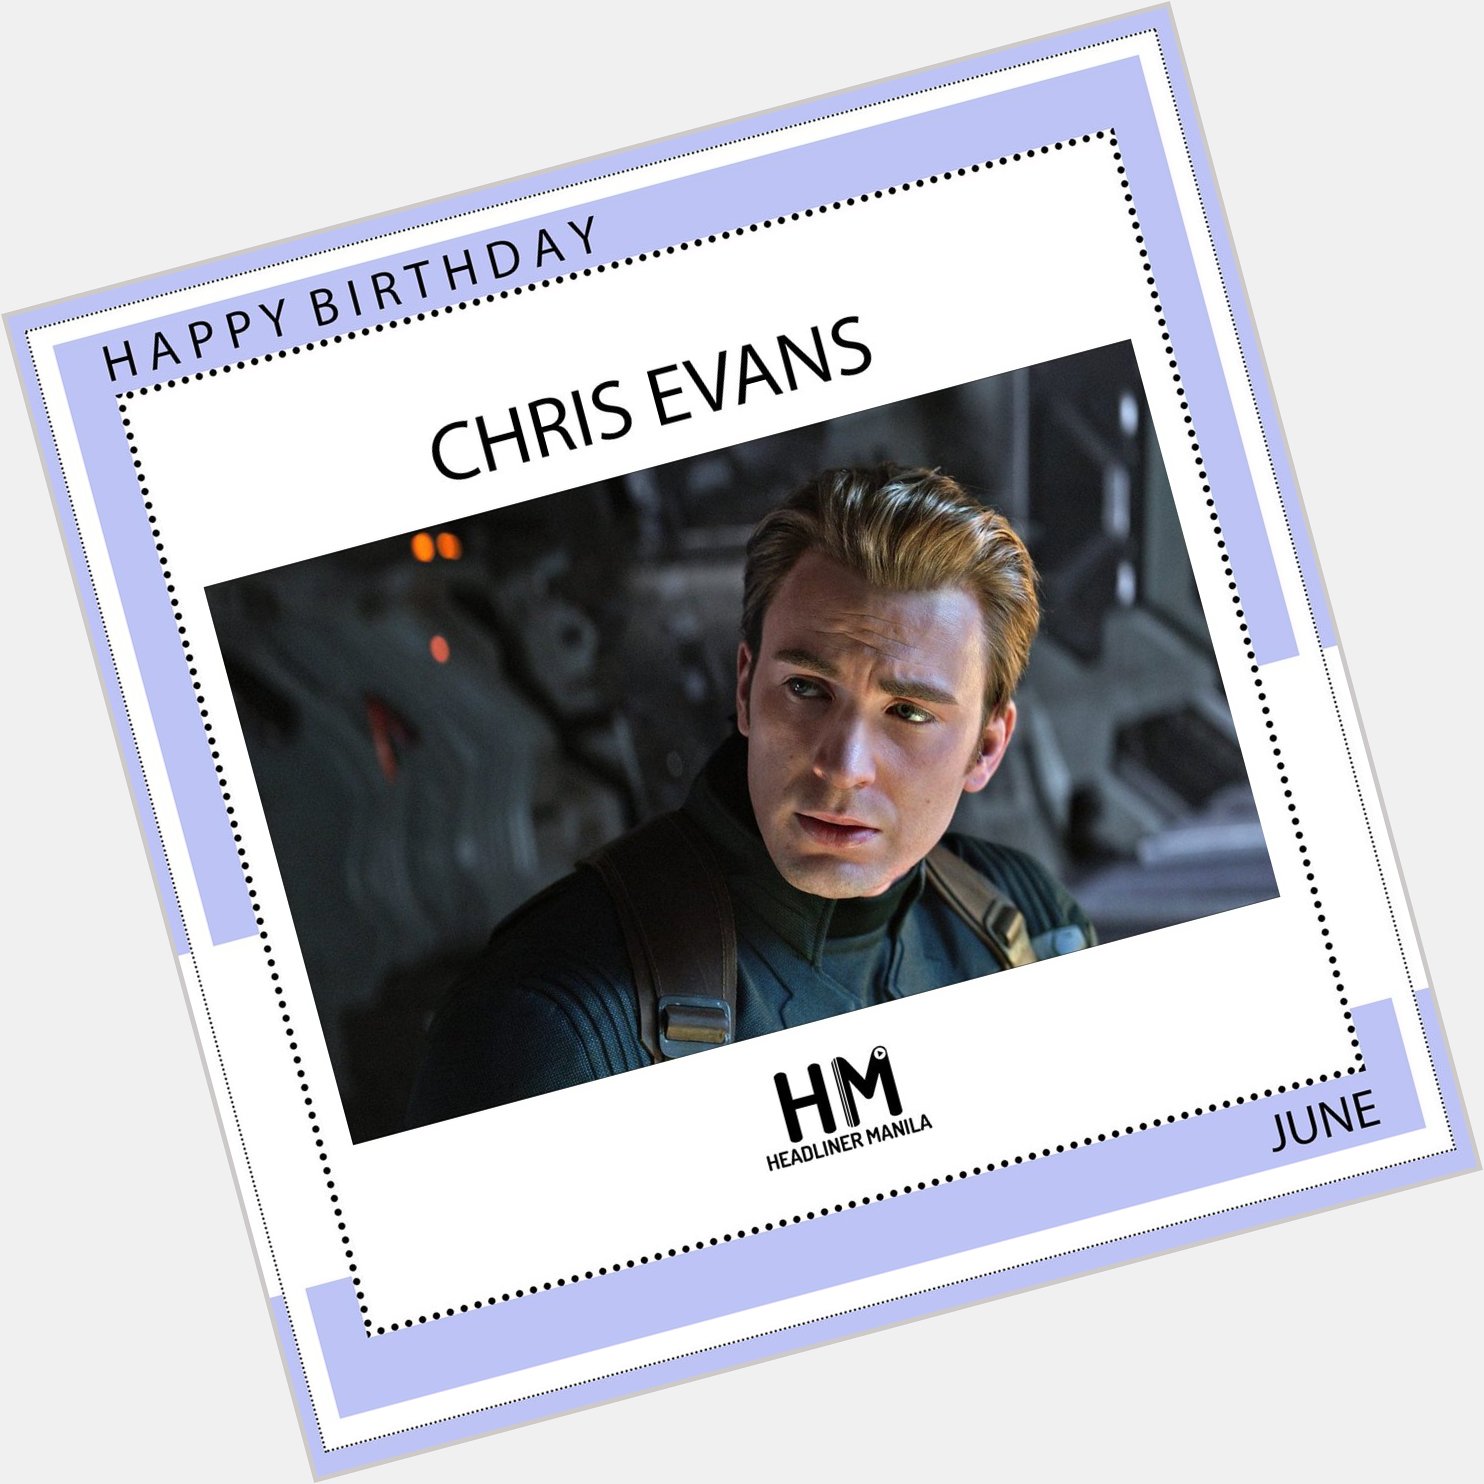 Happy birthday our Captain America, Chris Evans! 